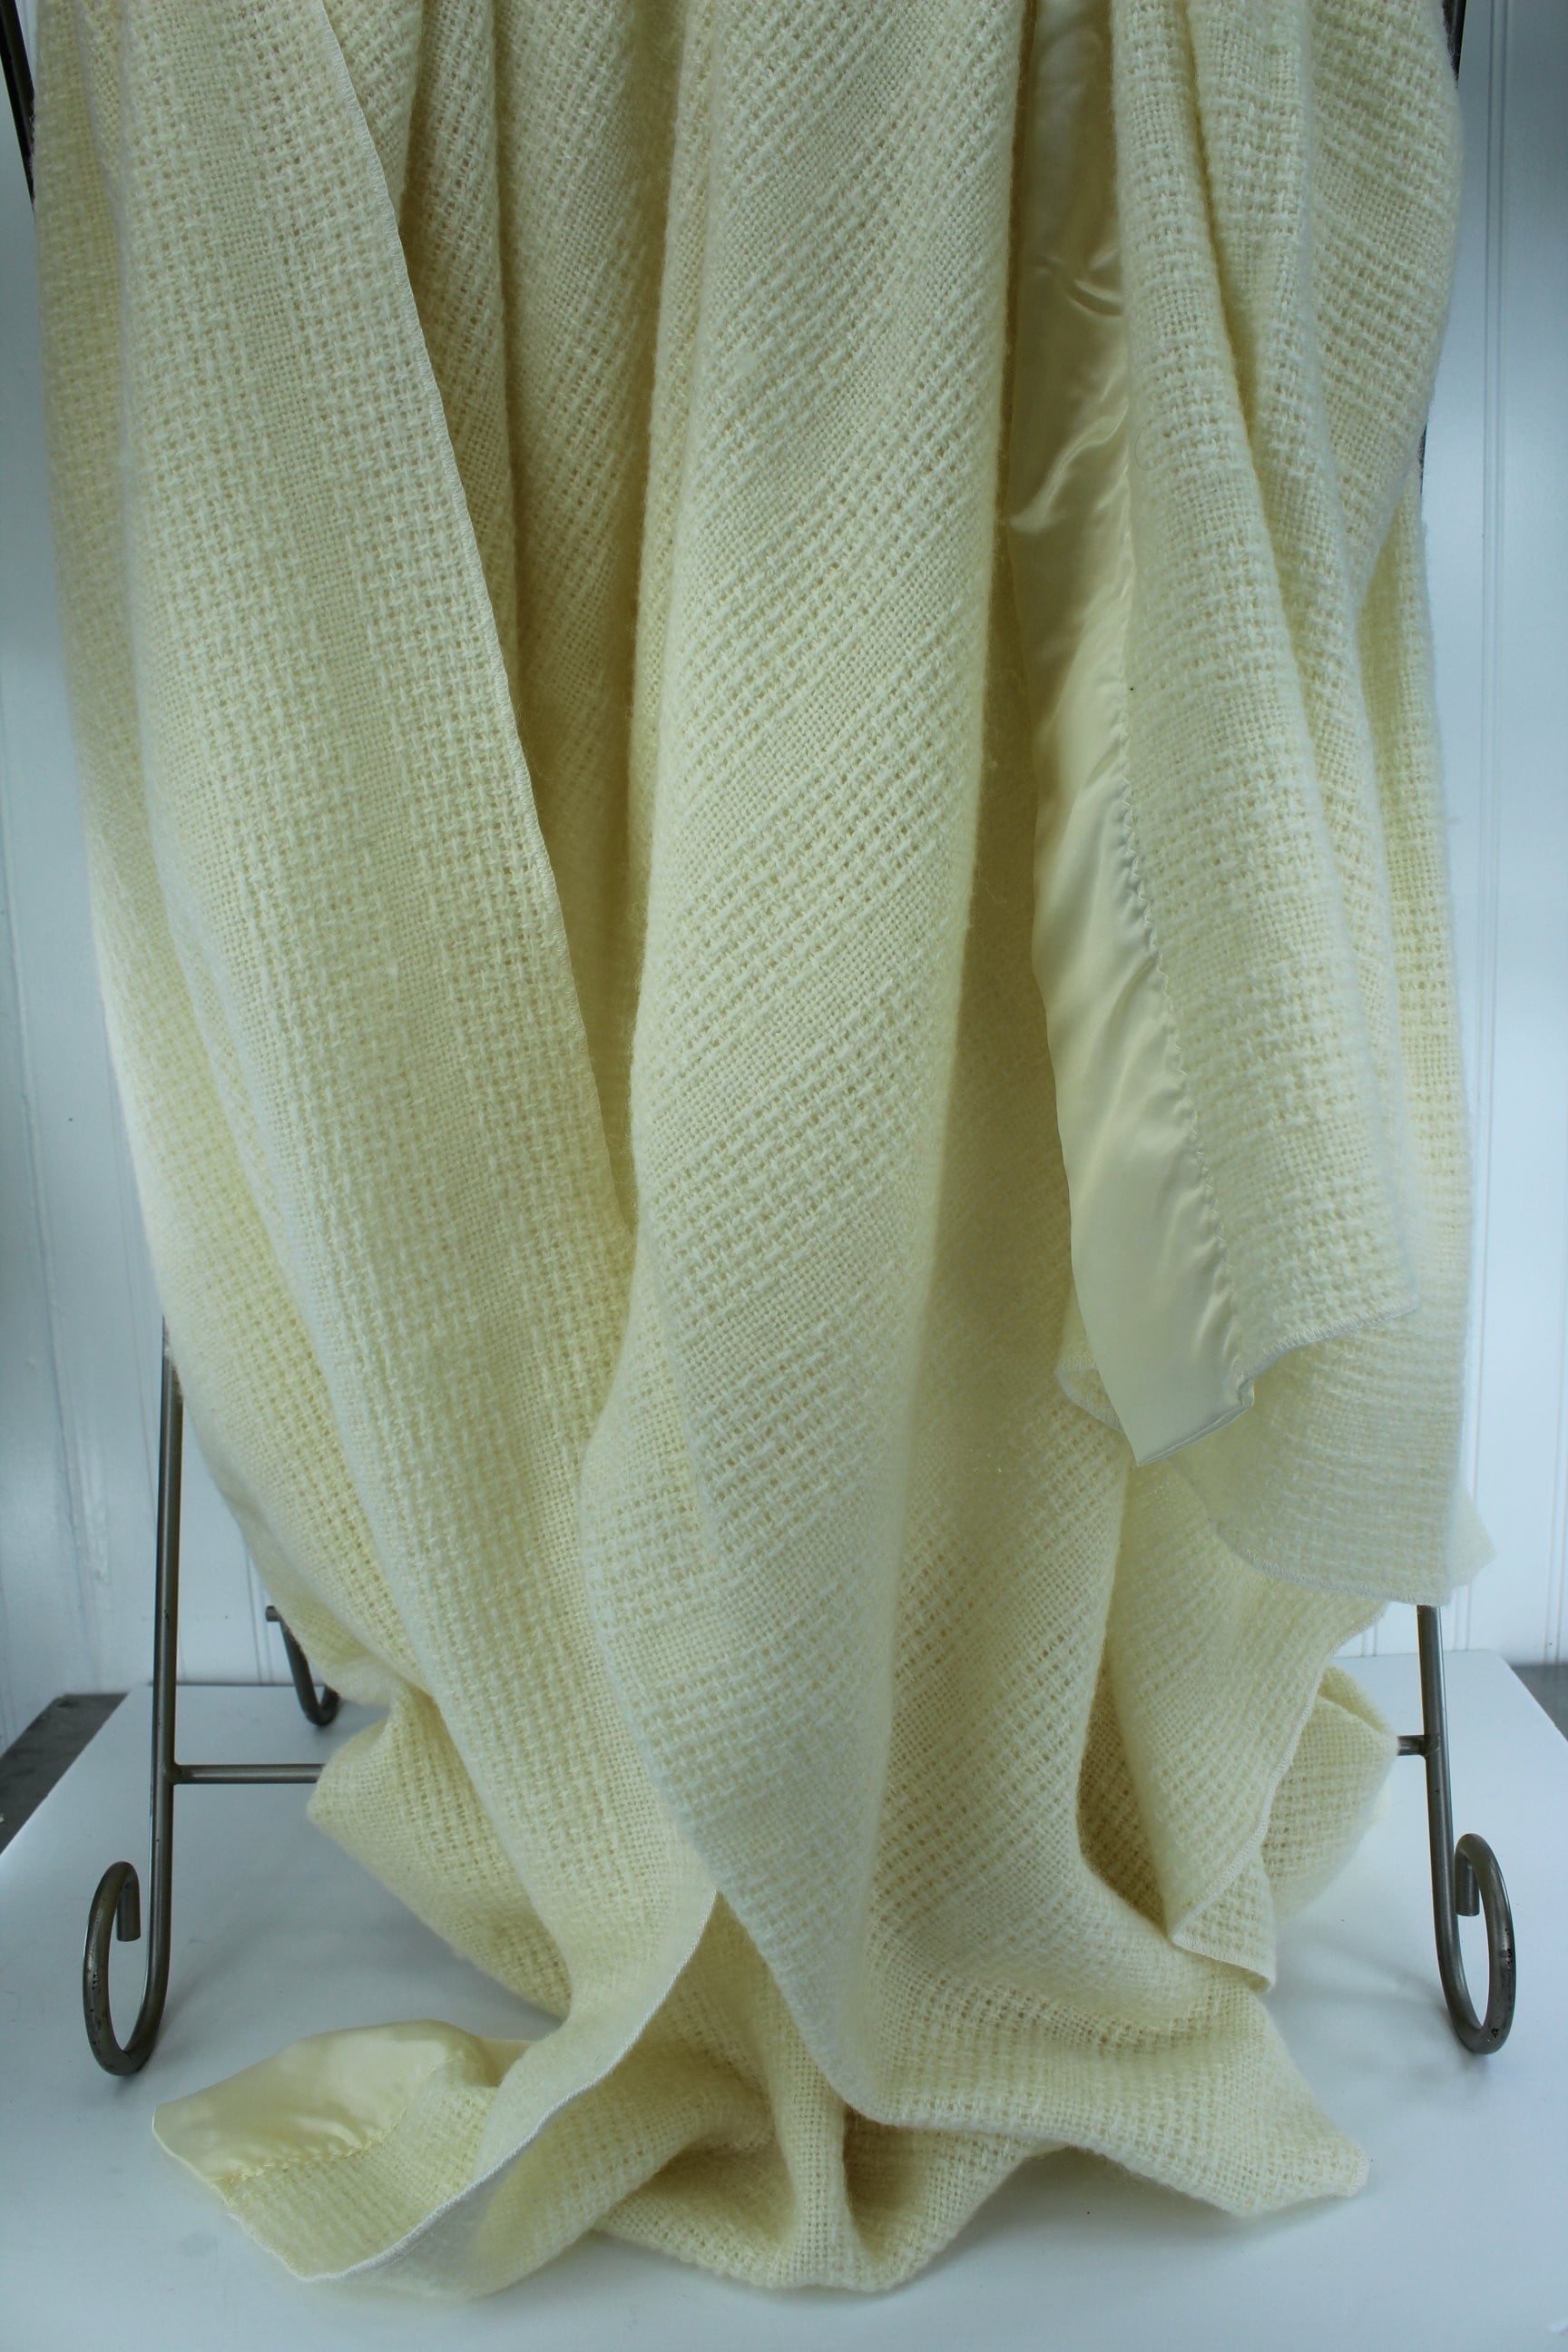 Faribo Ivory Washable Wool Acrylic Blend Blanket Basketweave Made USA Faribault MN layering long blanket